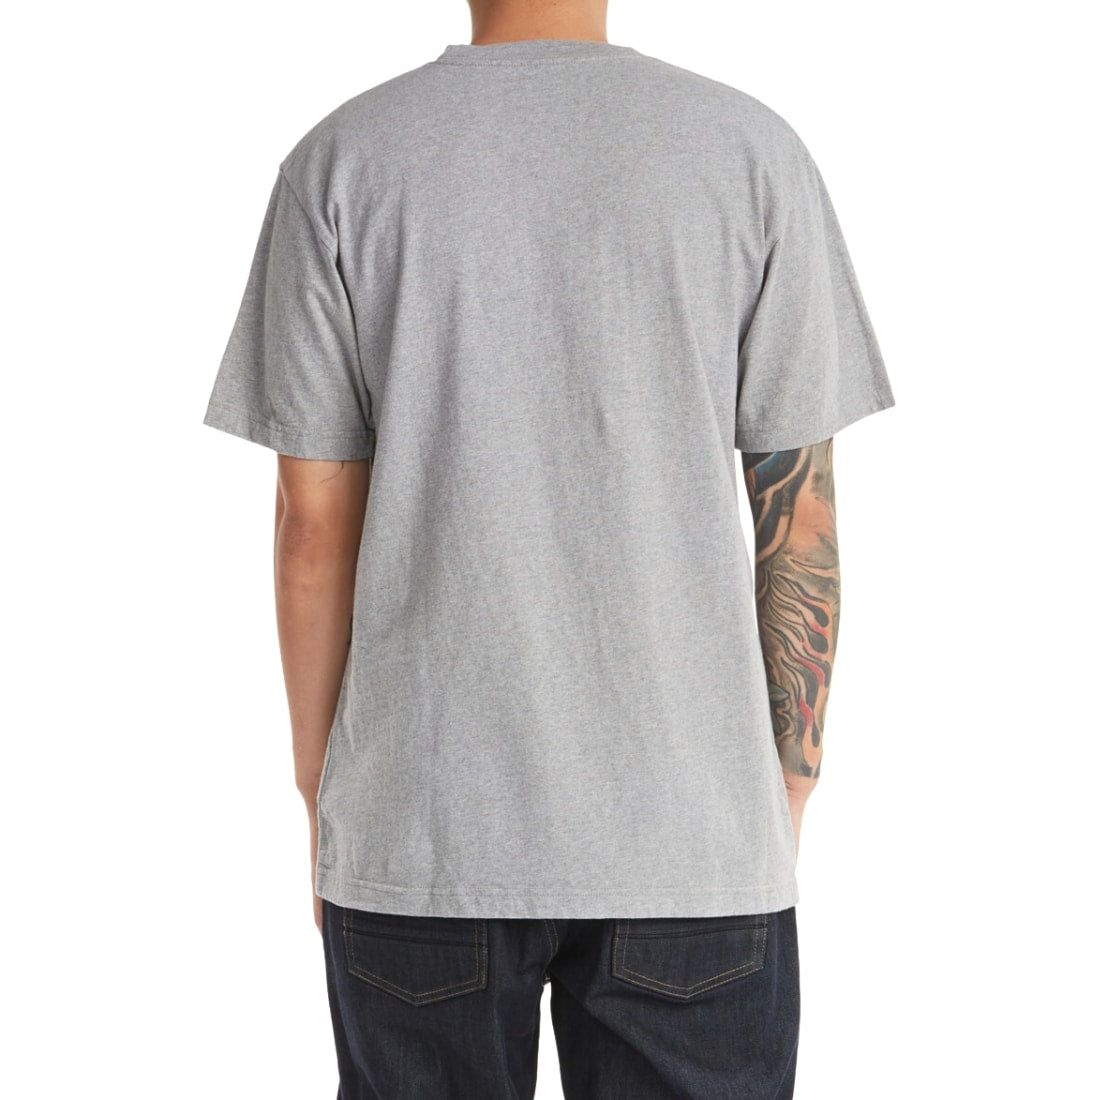 Dc Star T-Shirt - Heather Grey - Mens Skate Brand T-Shirt by DC